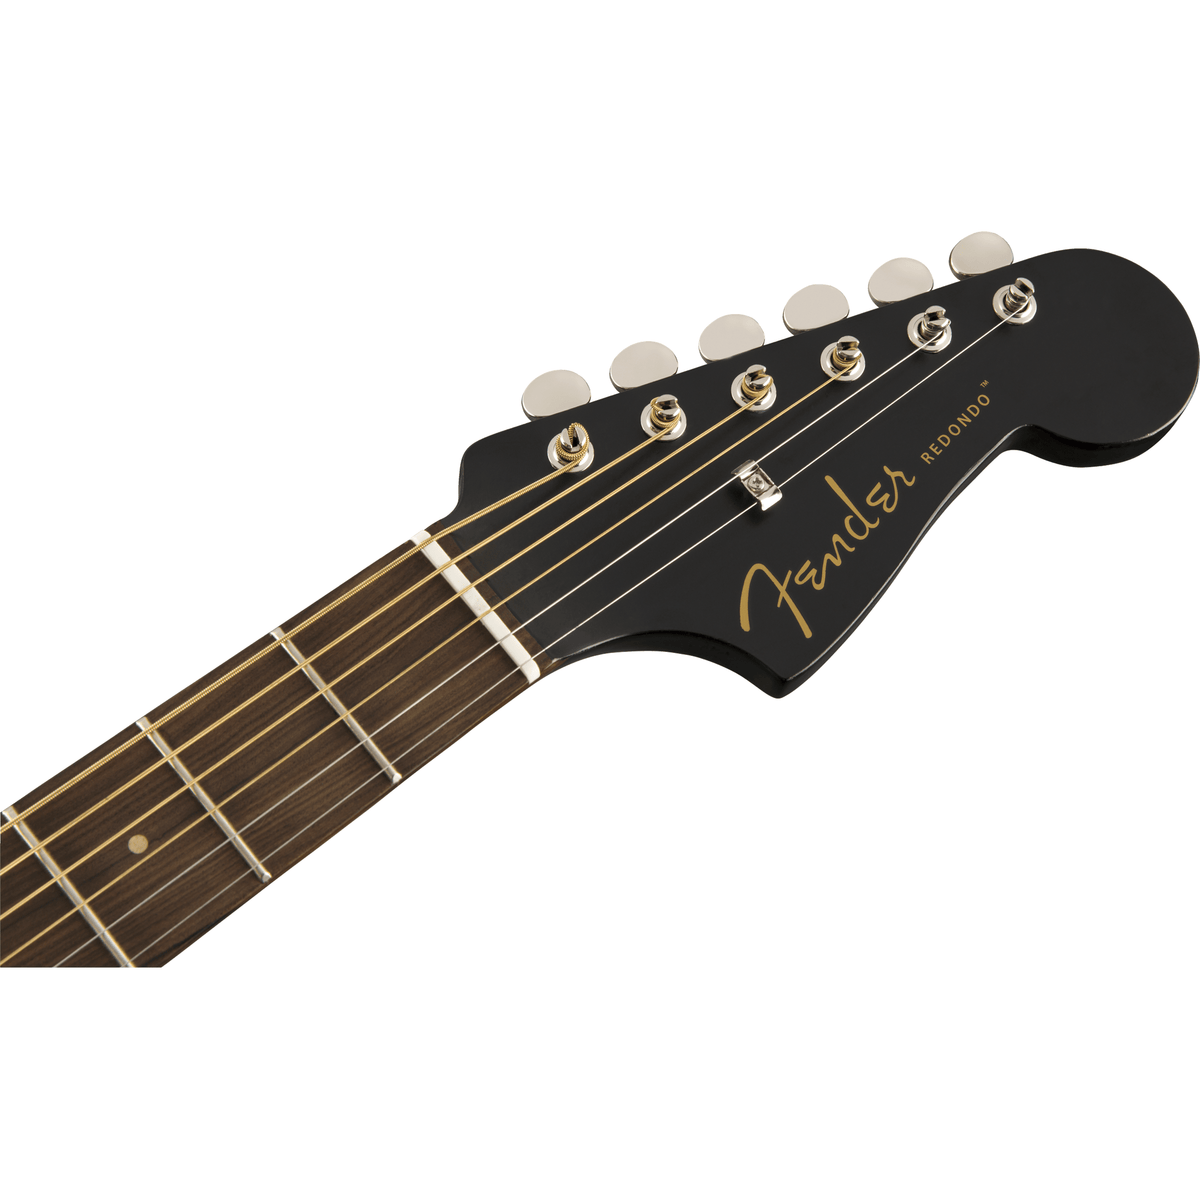 Fender Guitar Fender Redondo Special Acoustic/Electric Guitar Matte Black - Byron Music